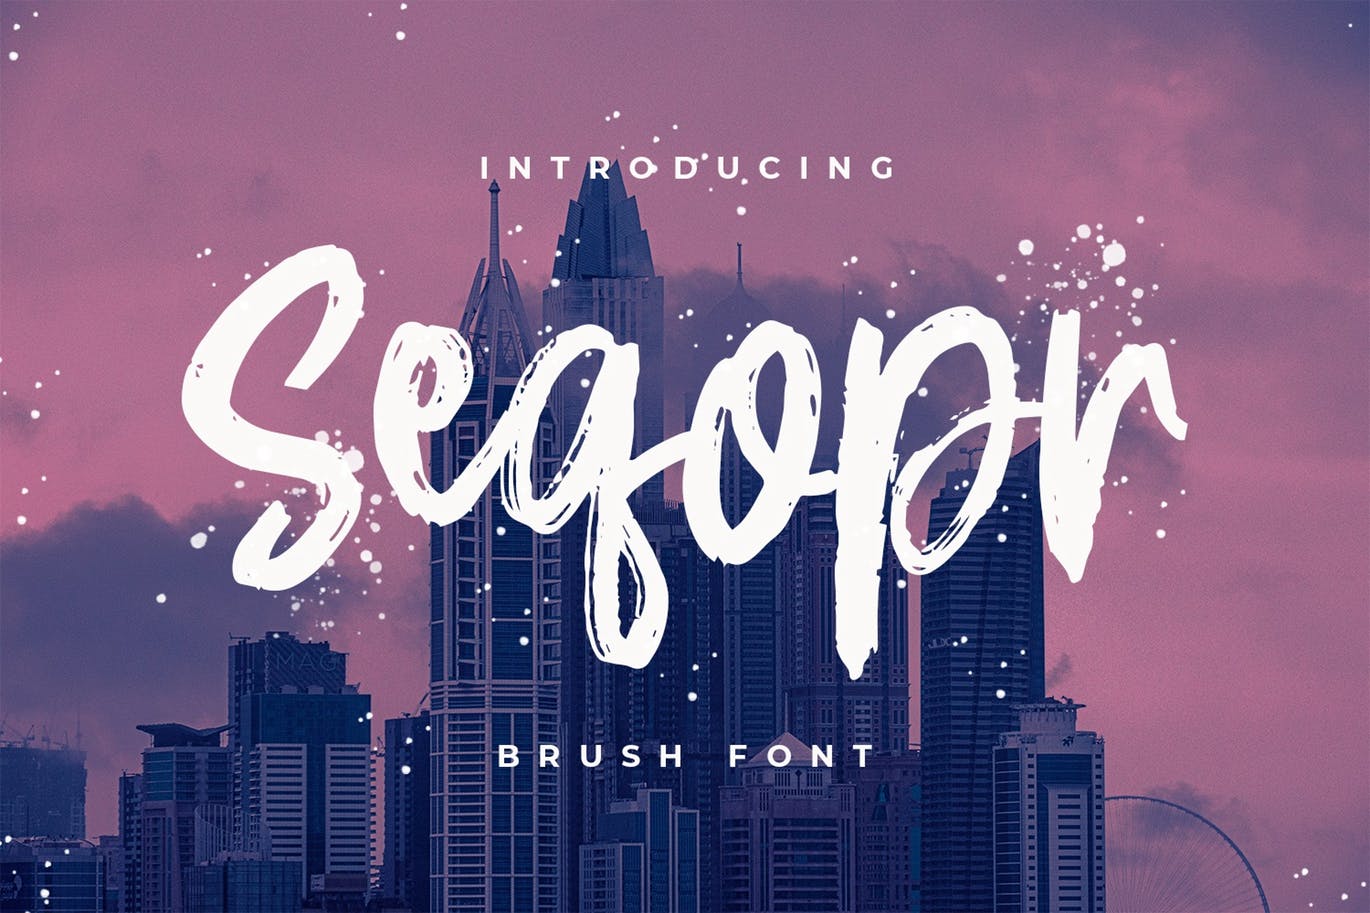 Logo/印刷设计英文笔刷字体亿图网易图库精选 Seqopr – The Brush Font插图